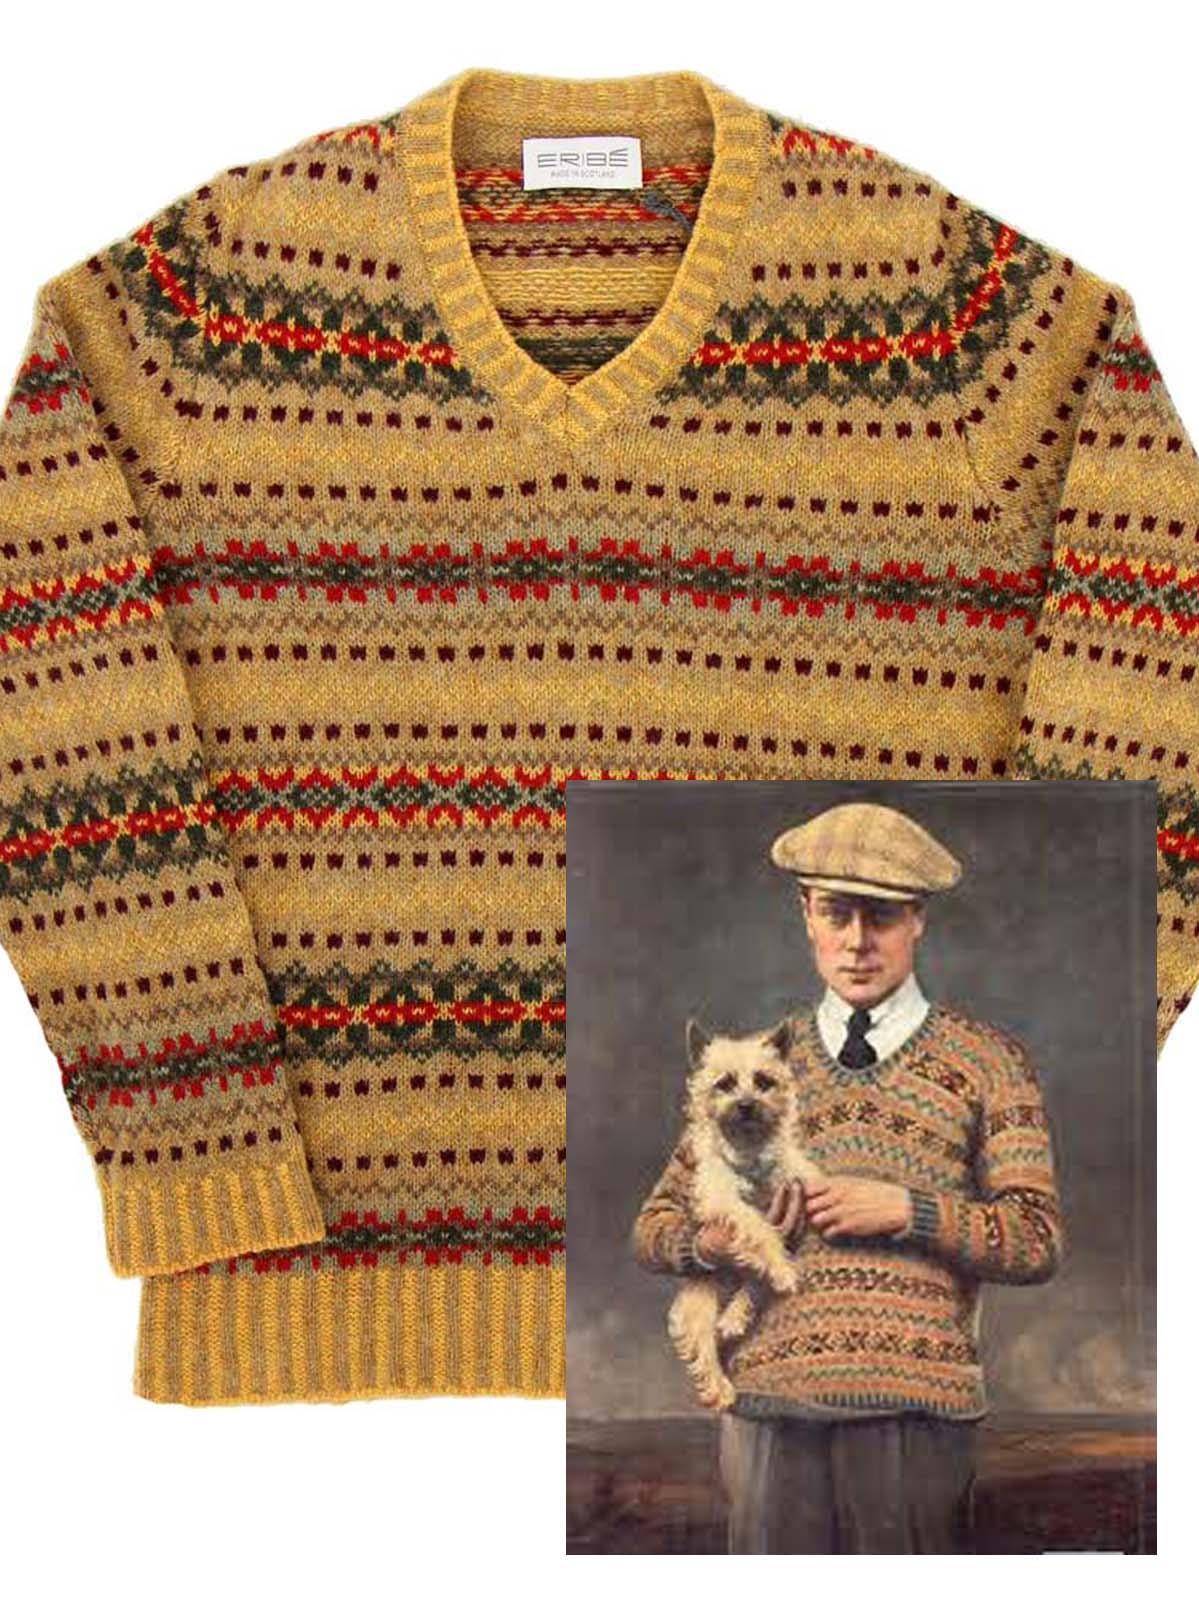 Edward III inspired vintage sweater